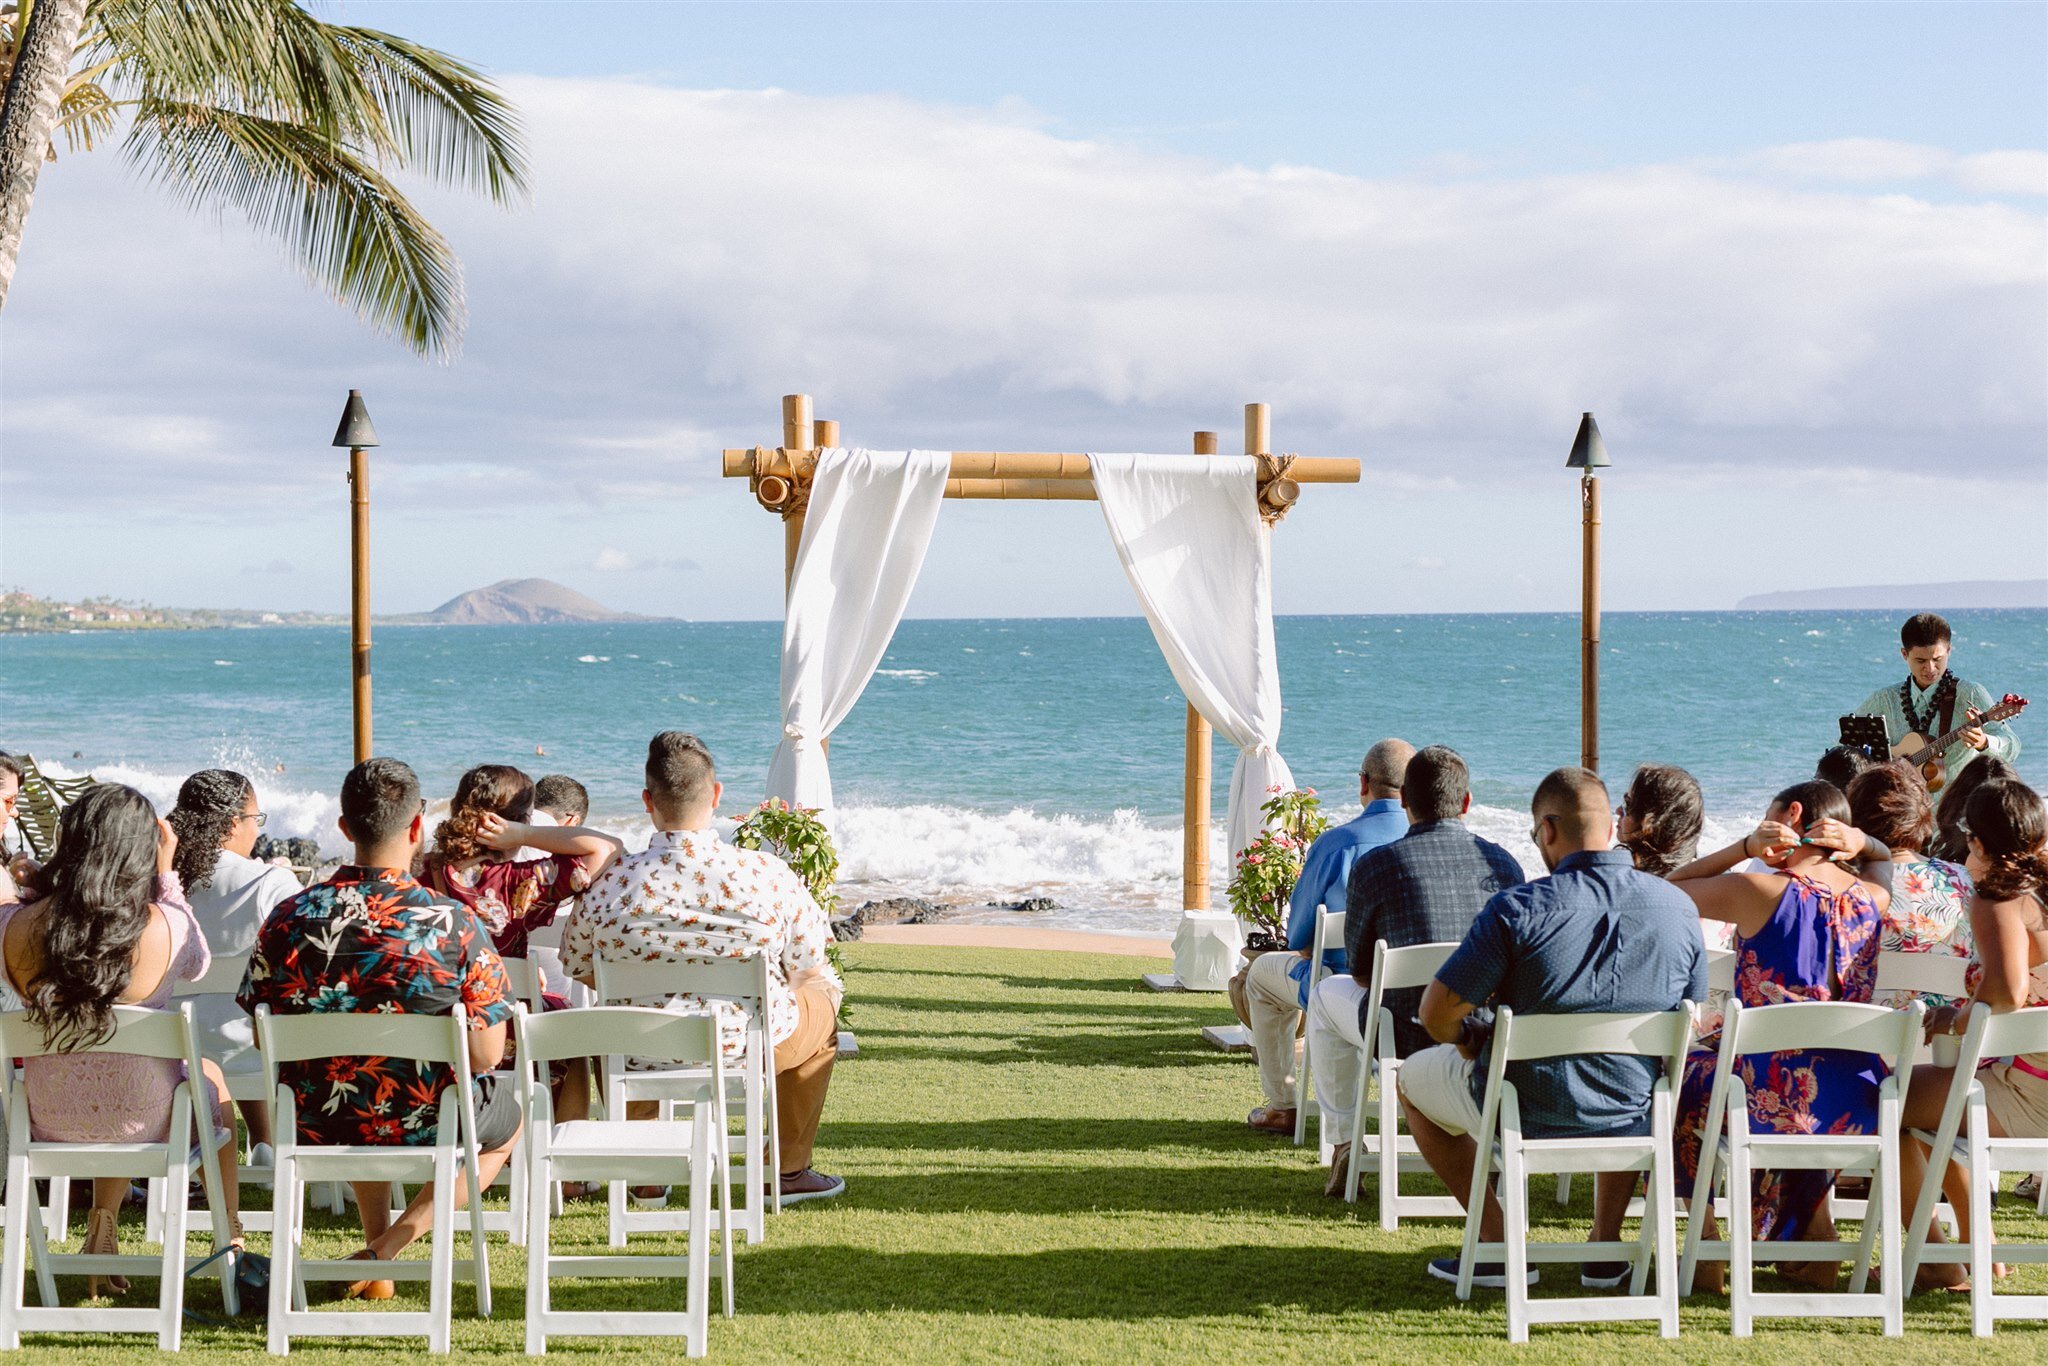 5-Palms-Restaurant-Maui-Hawaii-Wedding-ceremony-palm-trees-ocean-view